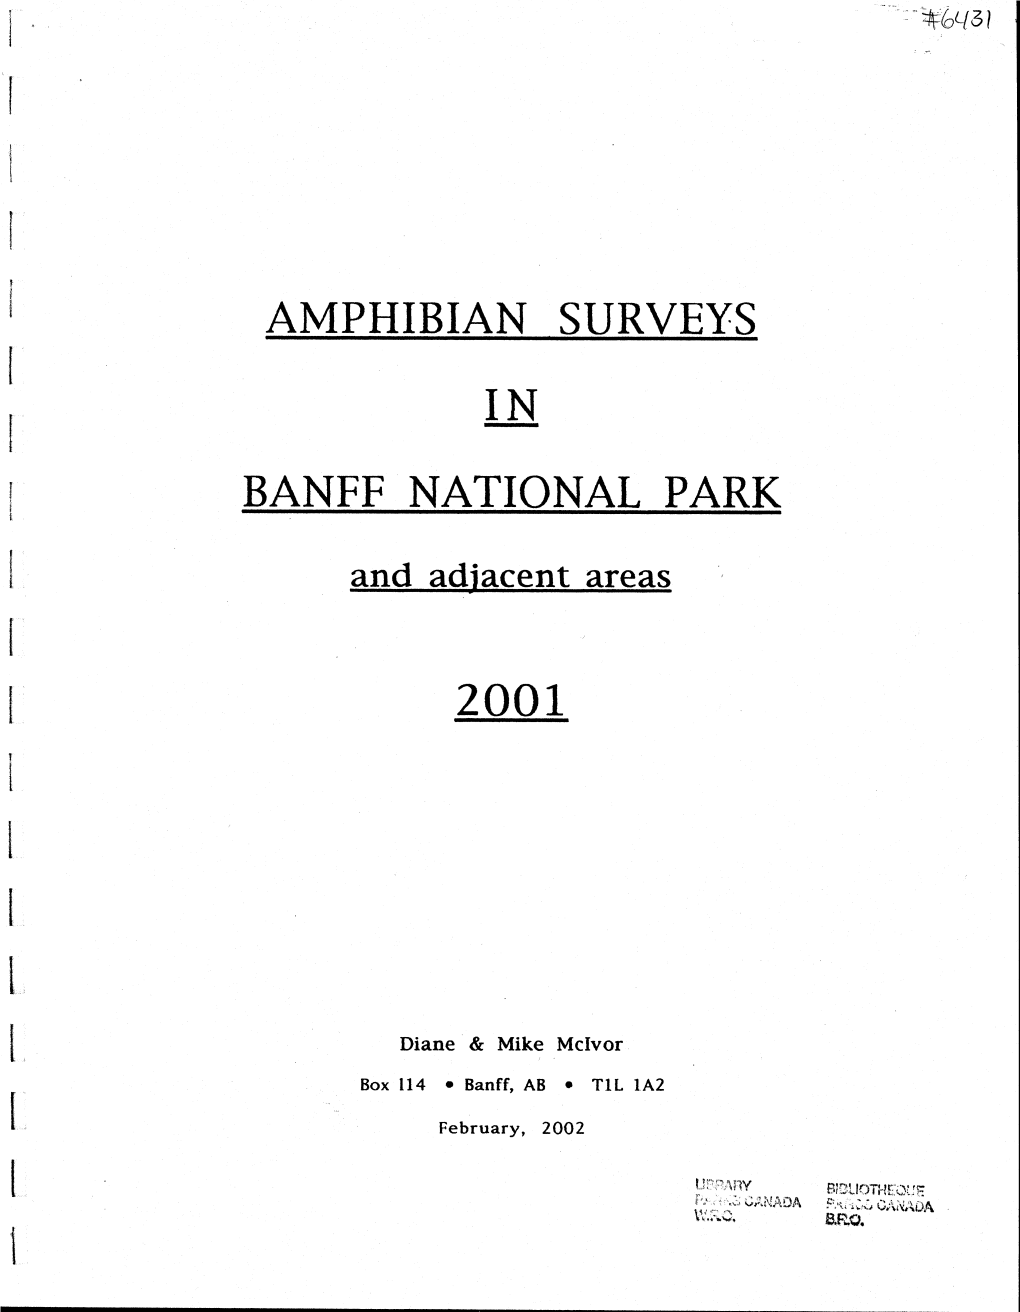 Amphibian Surveys in Banff National Park and Adjacent Areas 2001